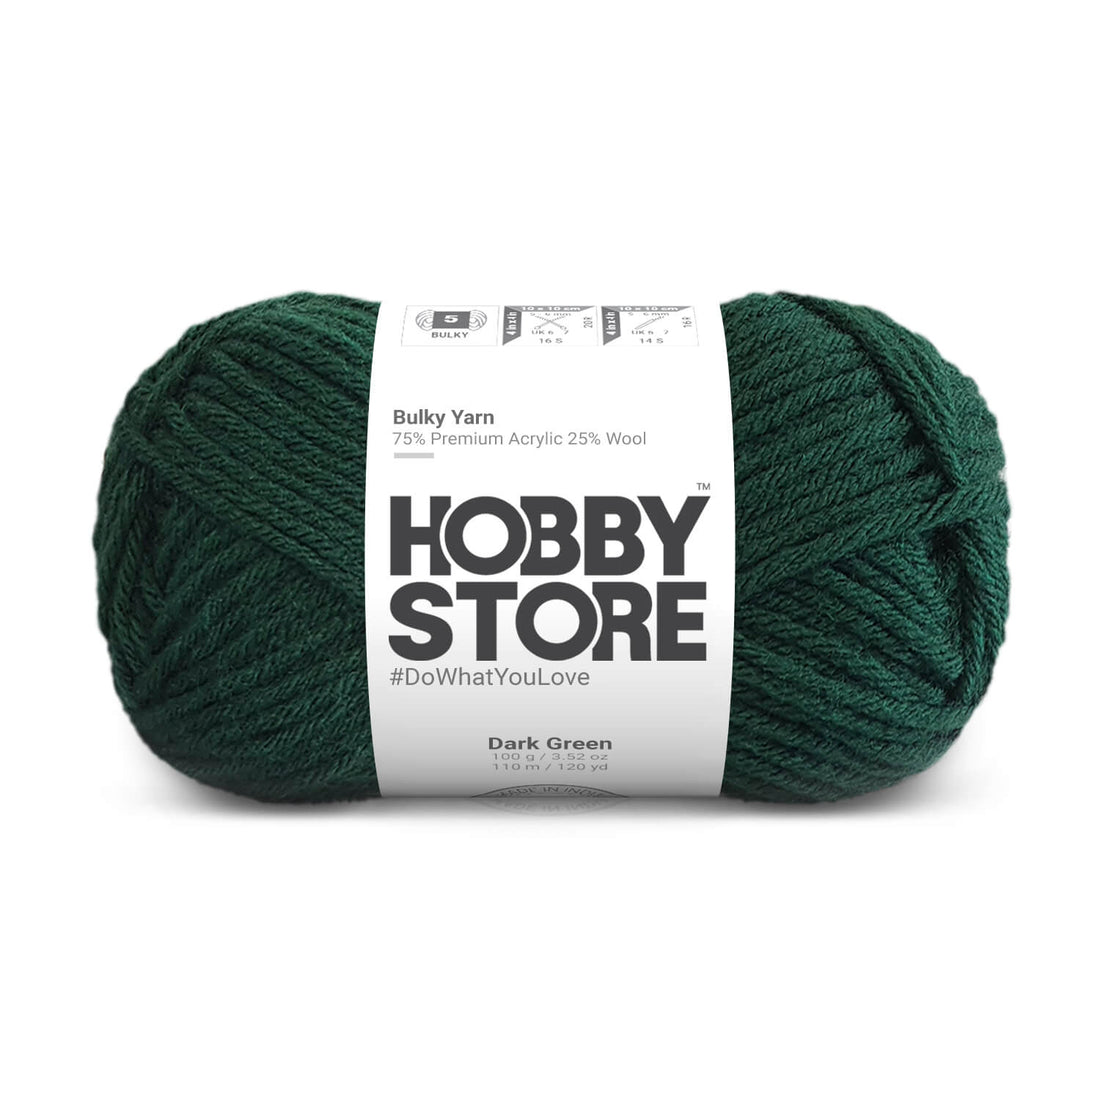 Bulky Yarn by Hobby Store - Dark Green 6013